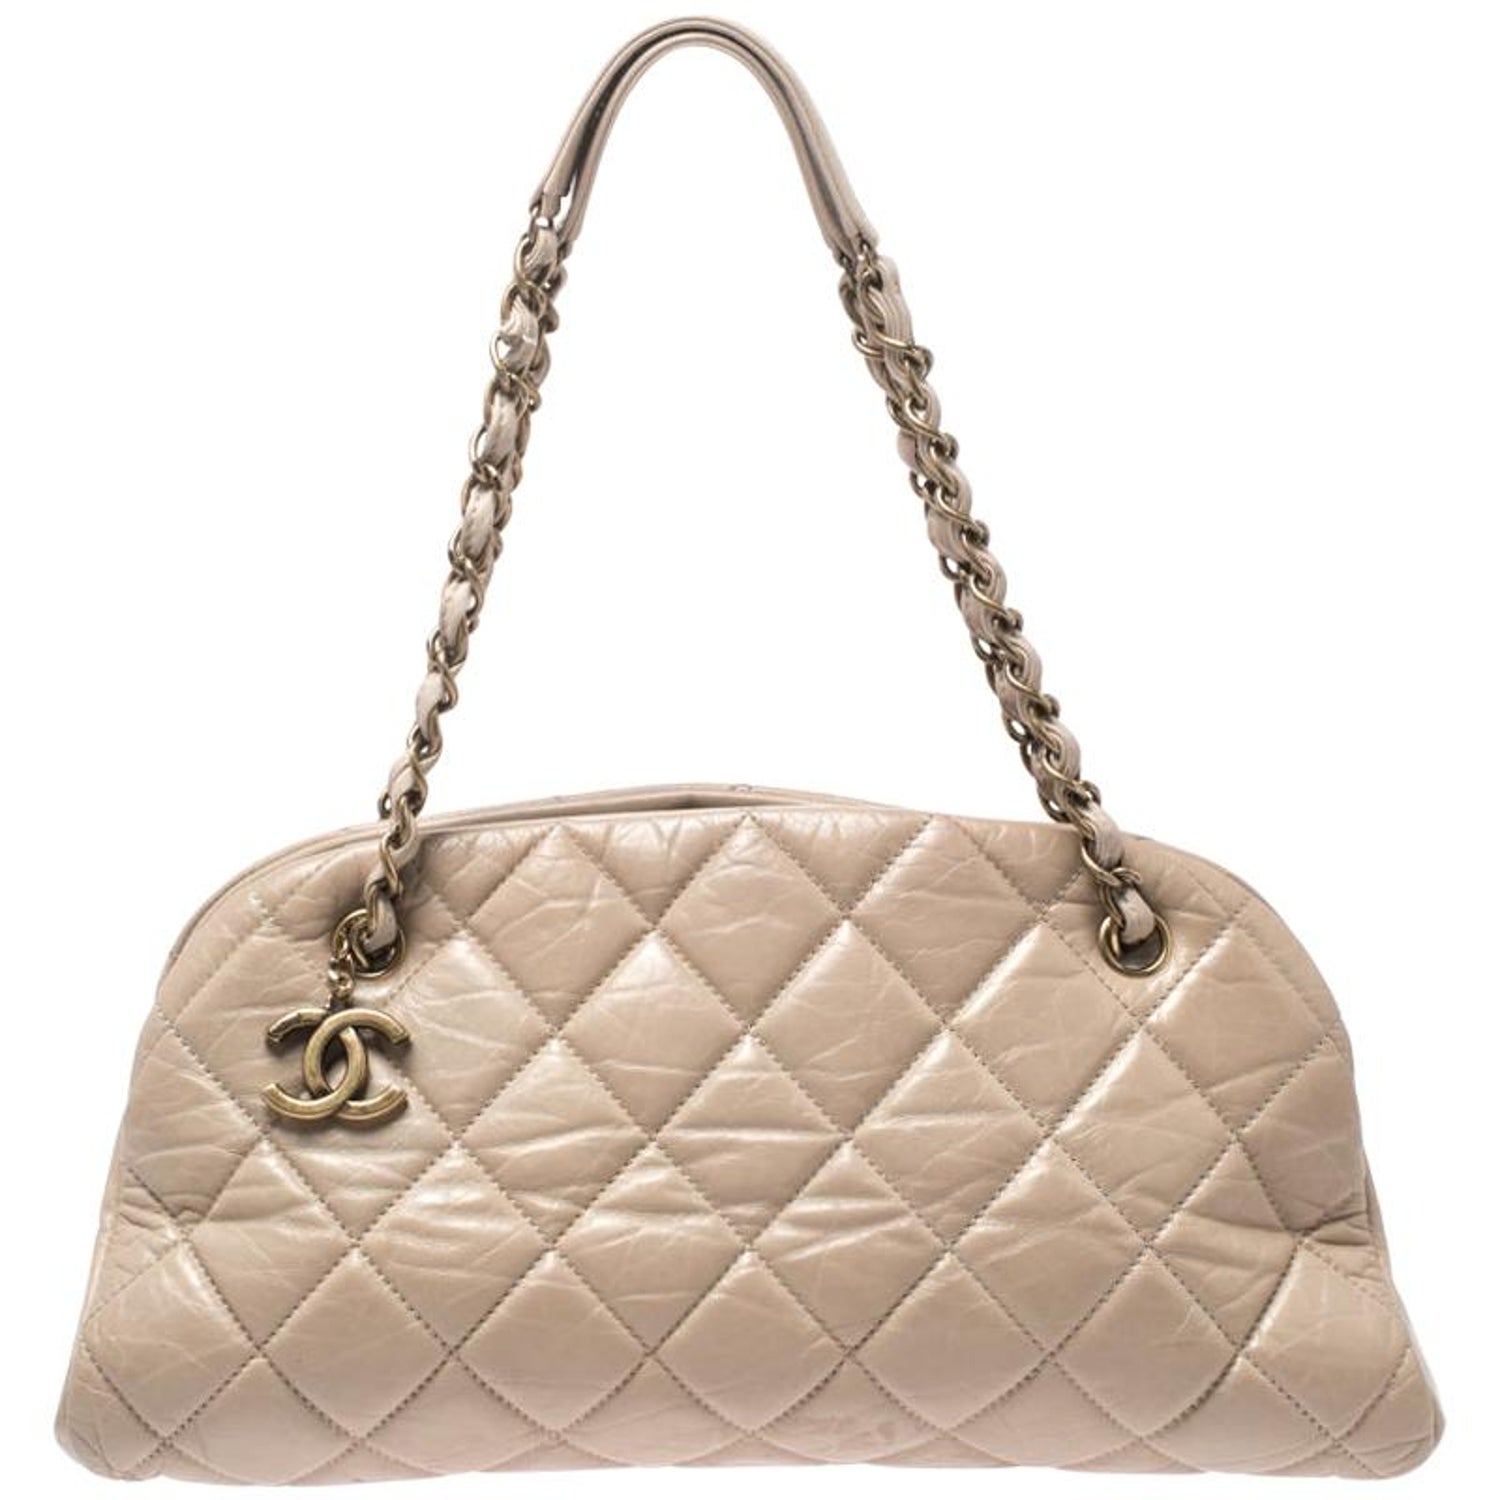 Preloved Chanel Calfskin Large Just Mademoiselle Bowling Bag Beige YBBQX9X (Kimmie's Bag)